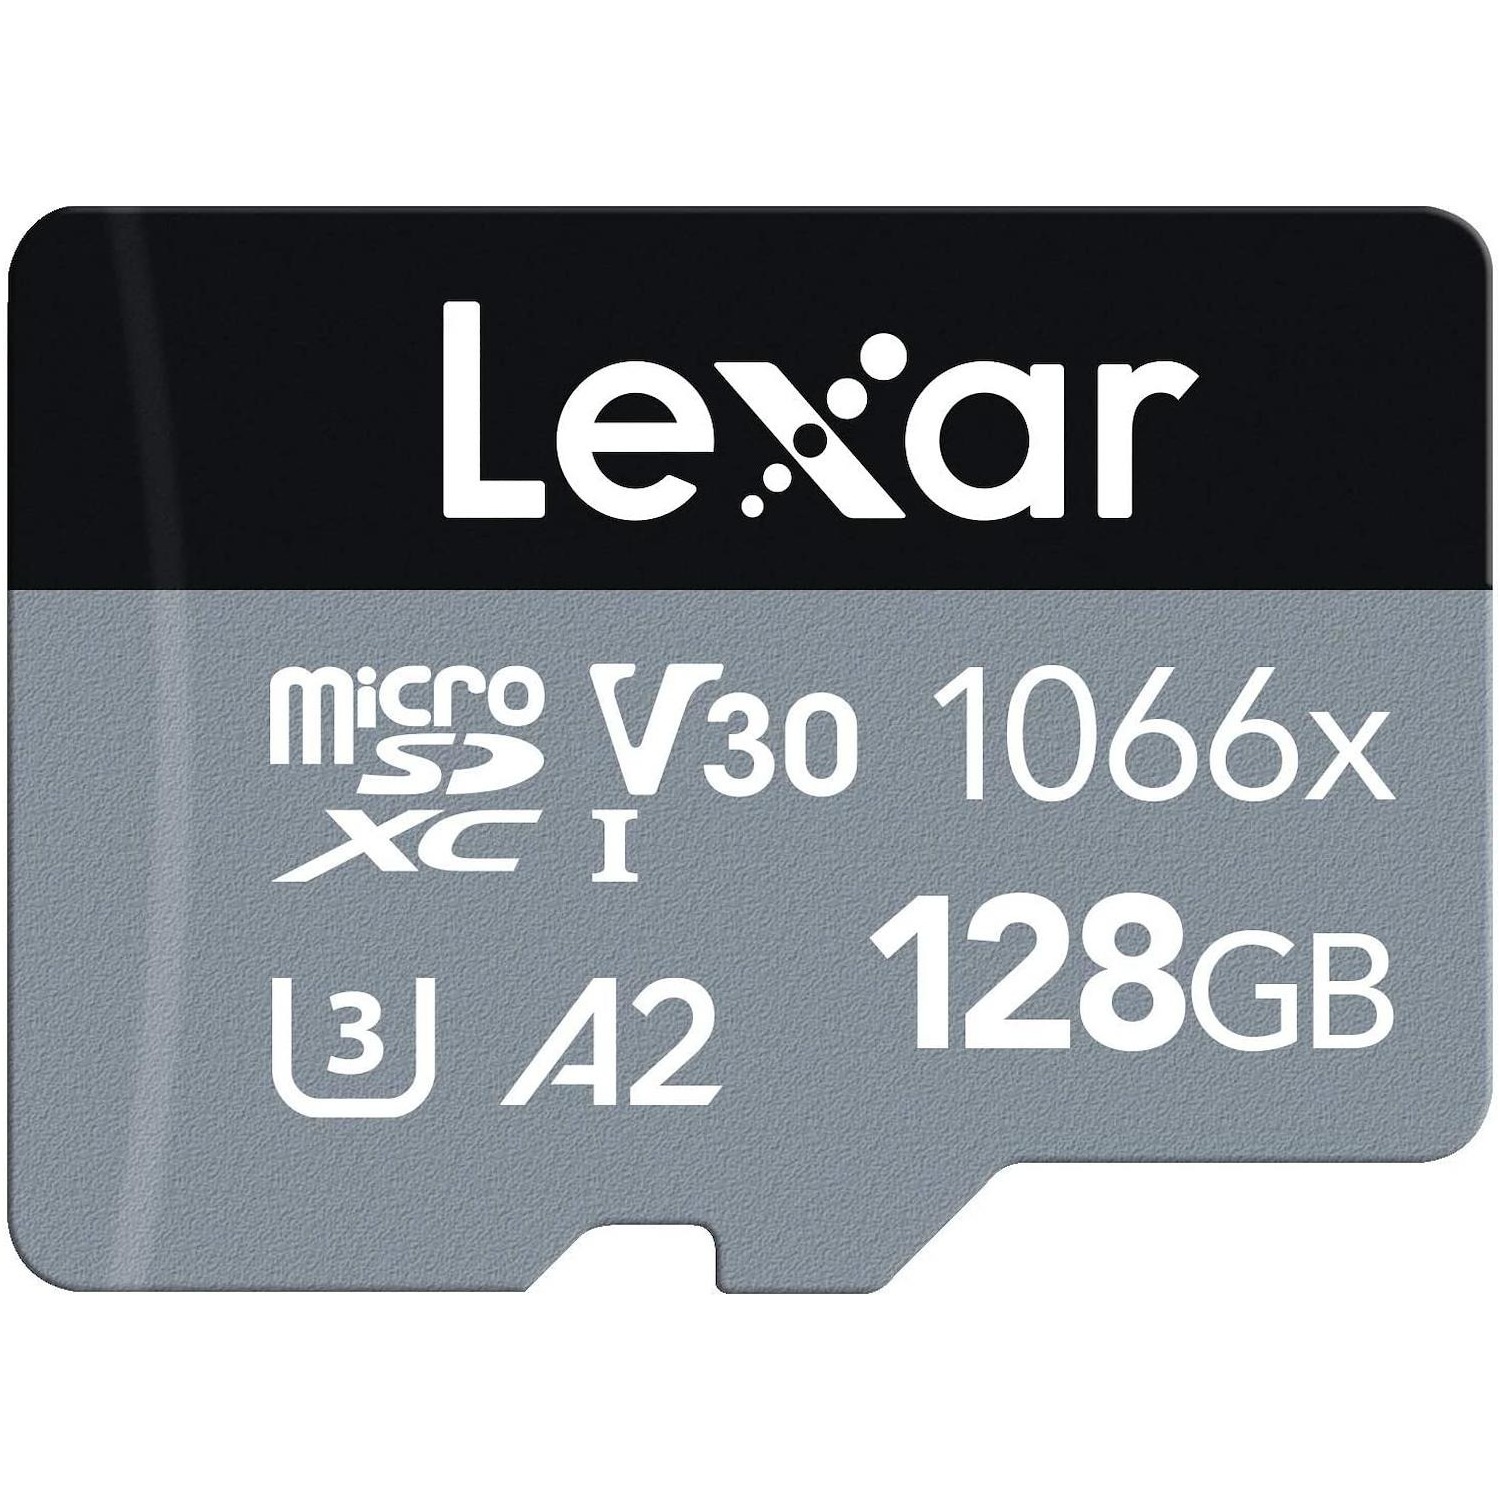 Immagine per MicroSD Lexar 128GB 1066X CL.10 da DIMOStore